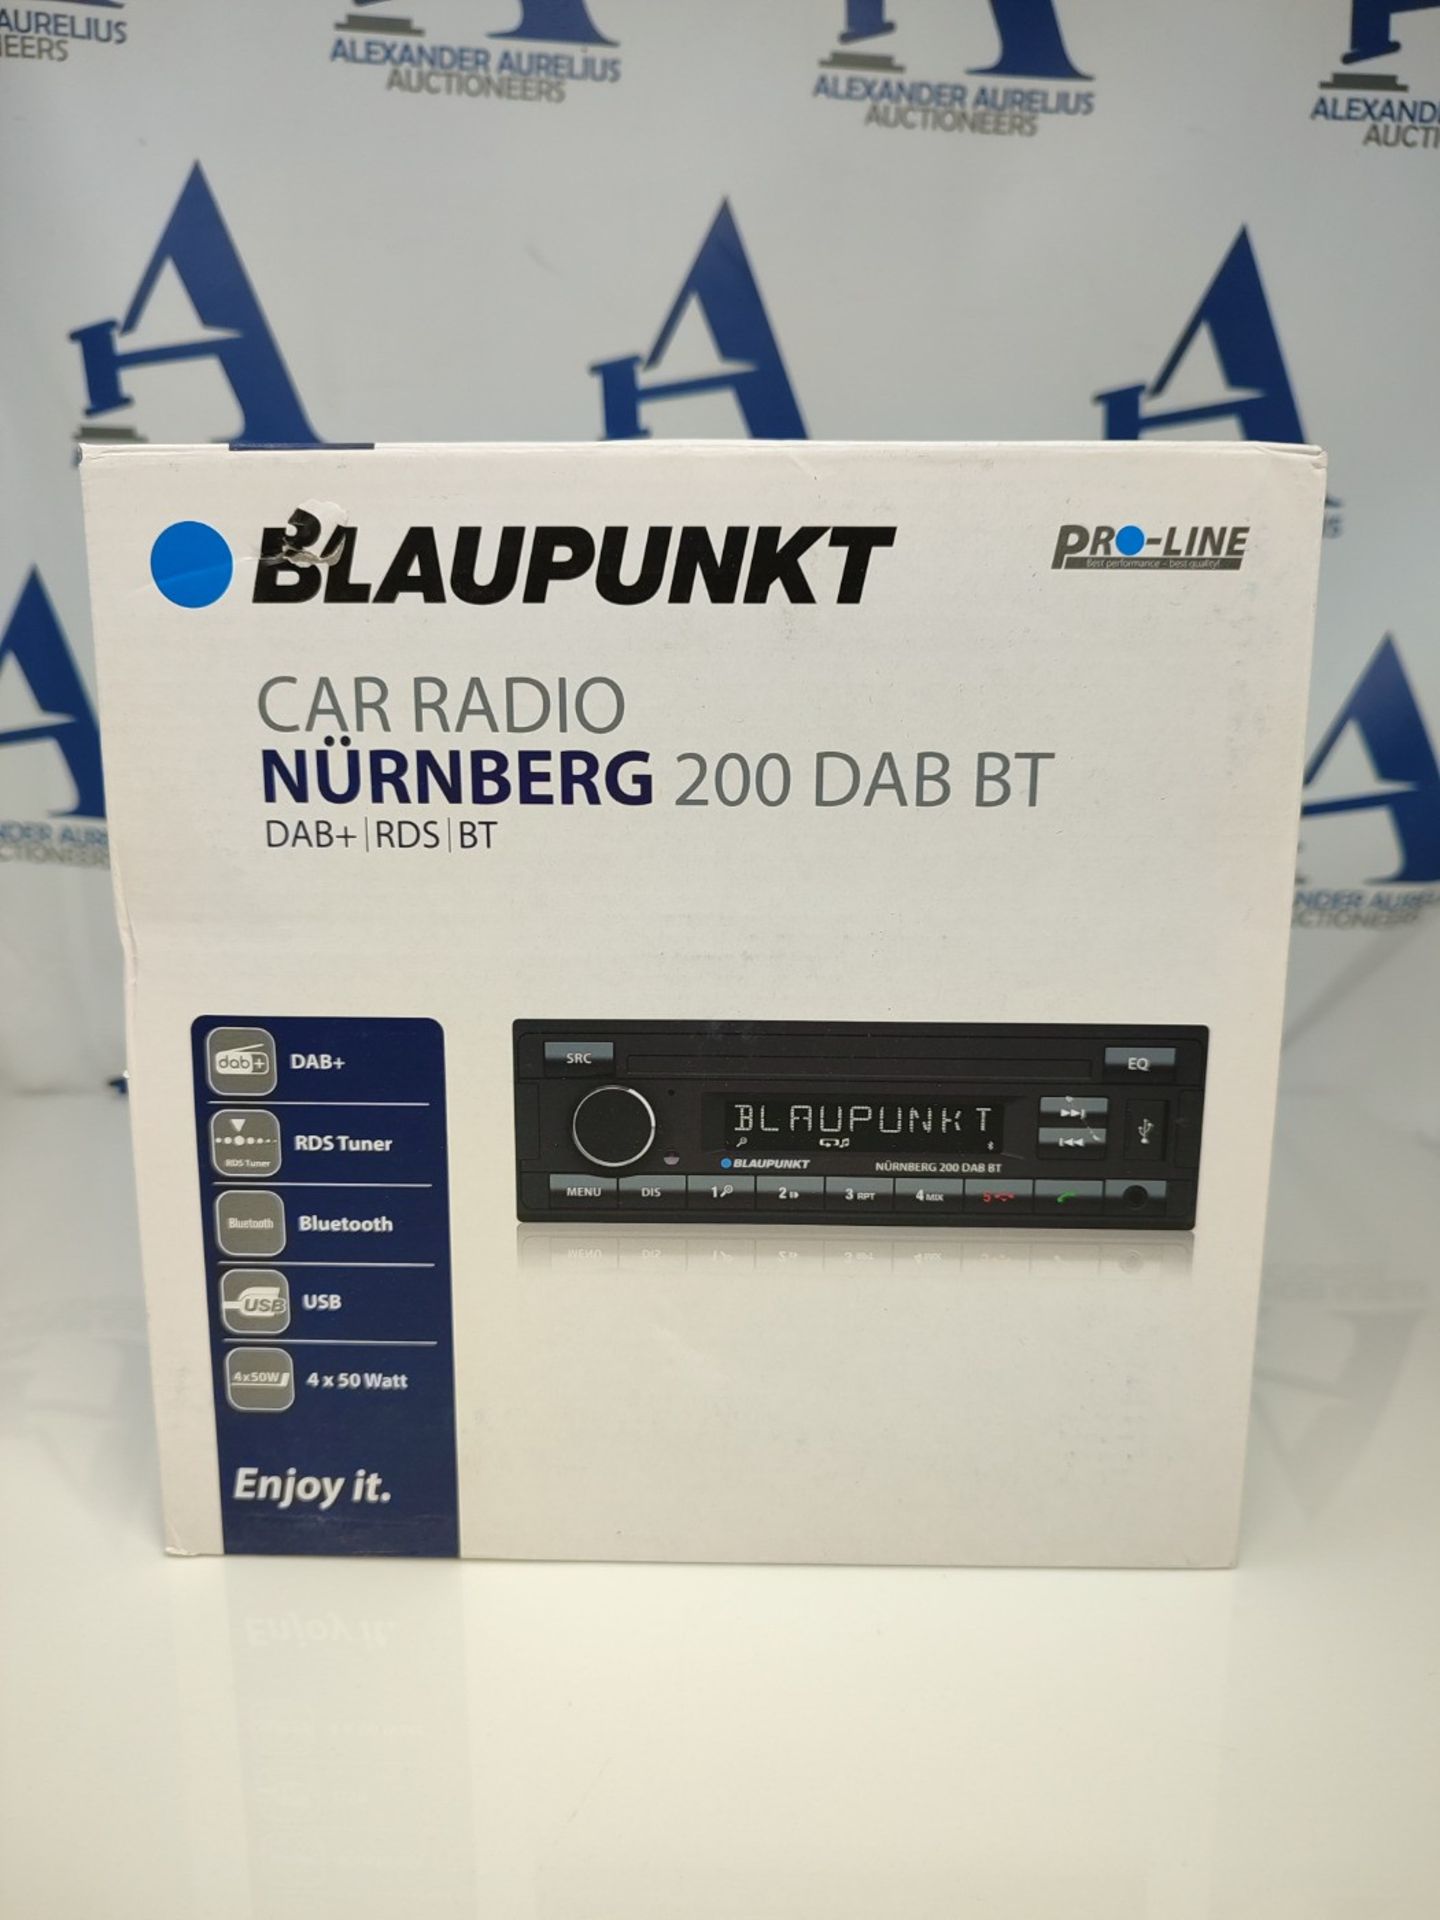 RRP £109.00 Blaupunkt Nürnberg 200 DAB BT car radio with Bluetooth hands-free system, DAB+ tuner. - Image 2 of 3